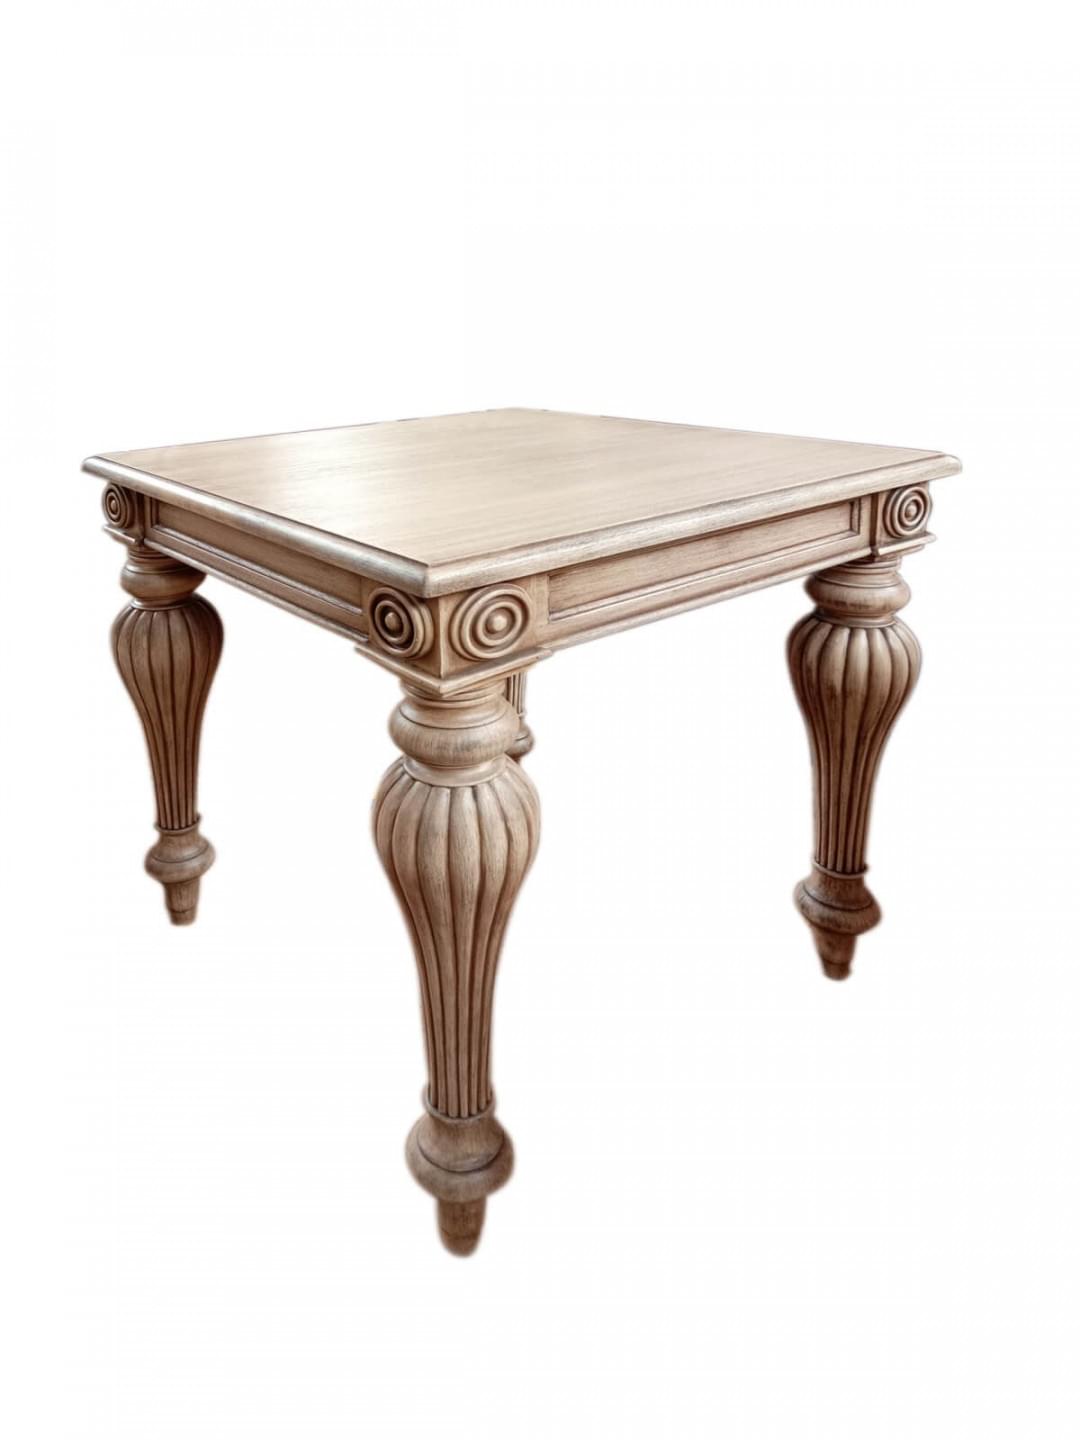 GRETTA SIDE TABLE from Lifetime Design Furniture